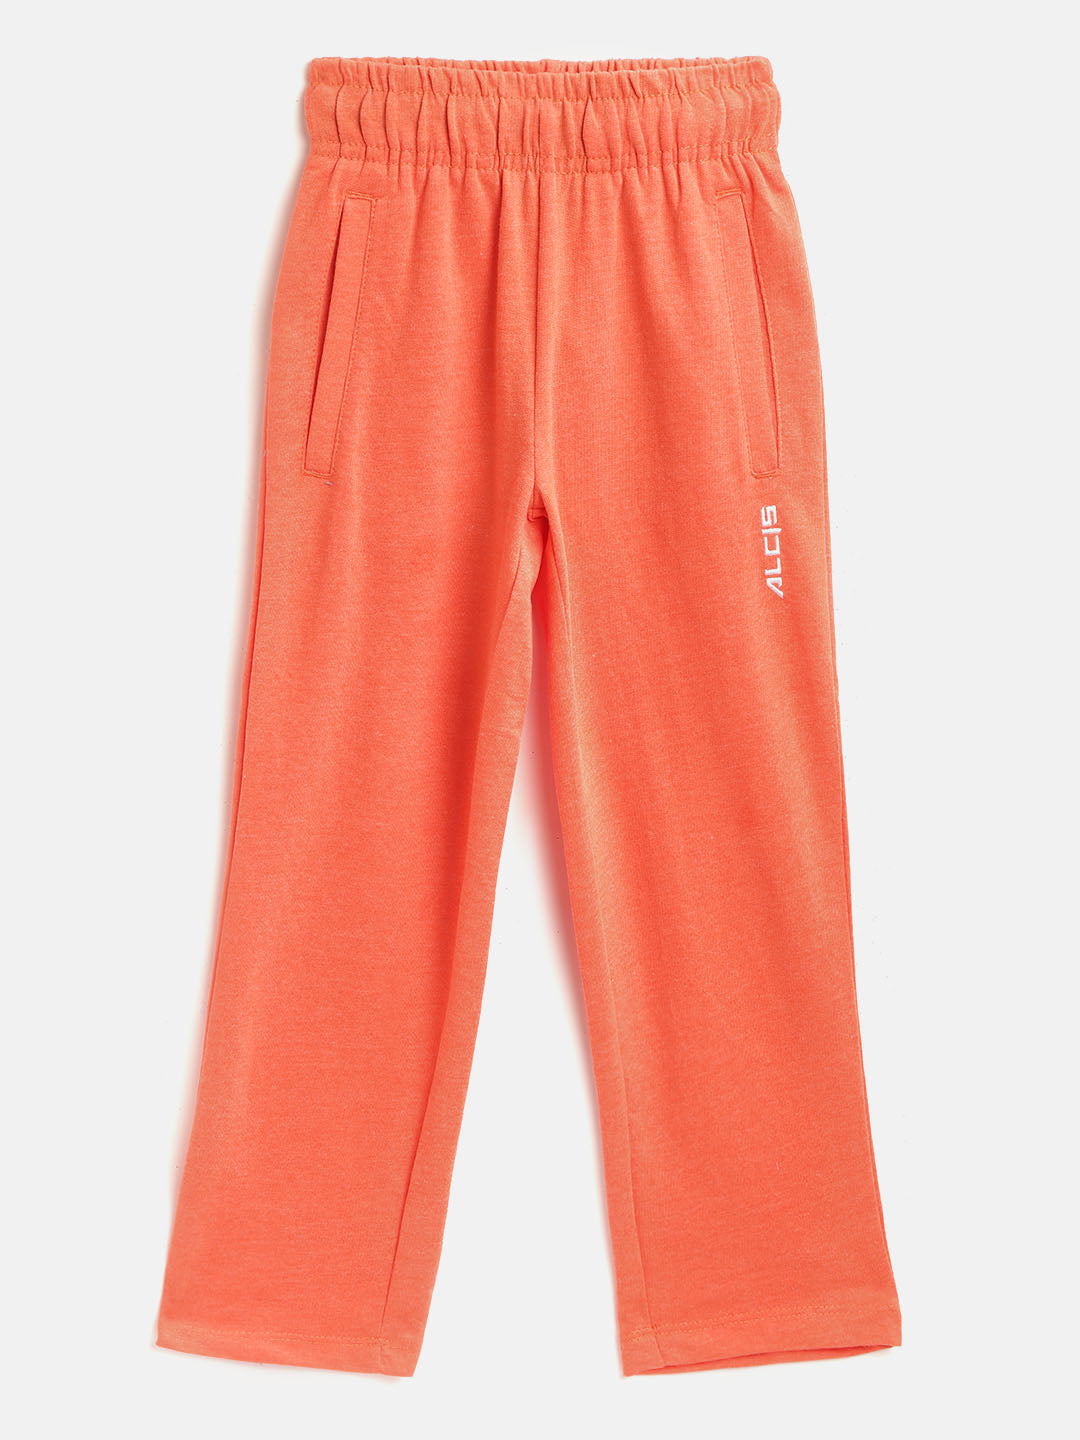 Alcis Girls Orange Solid Track Pants ALGPN0301-4Y